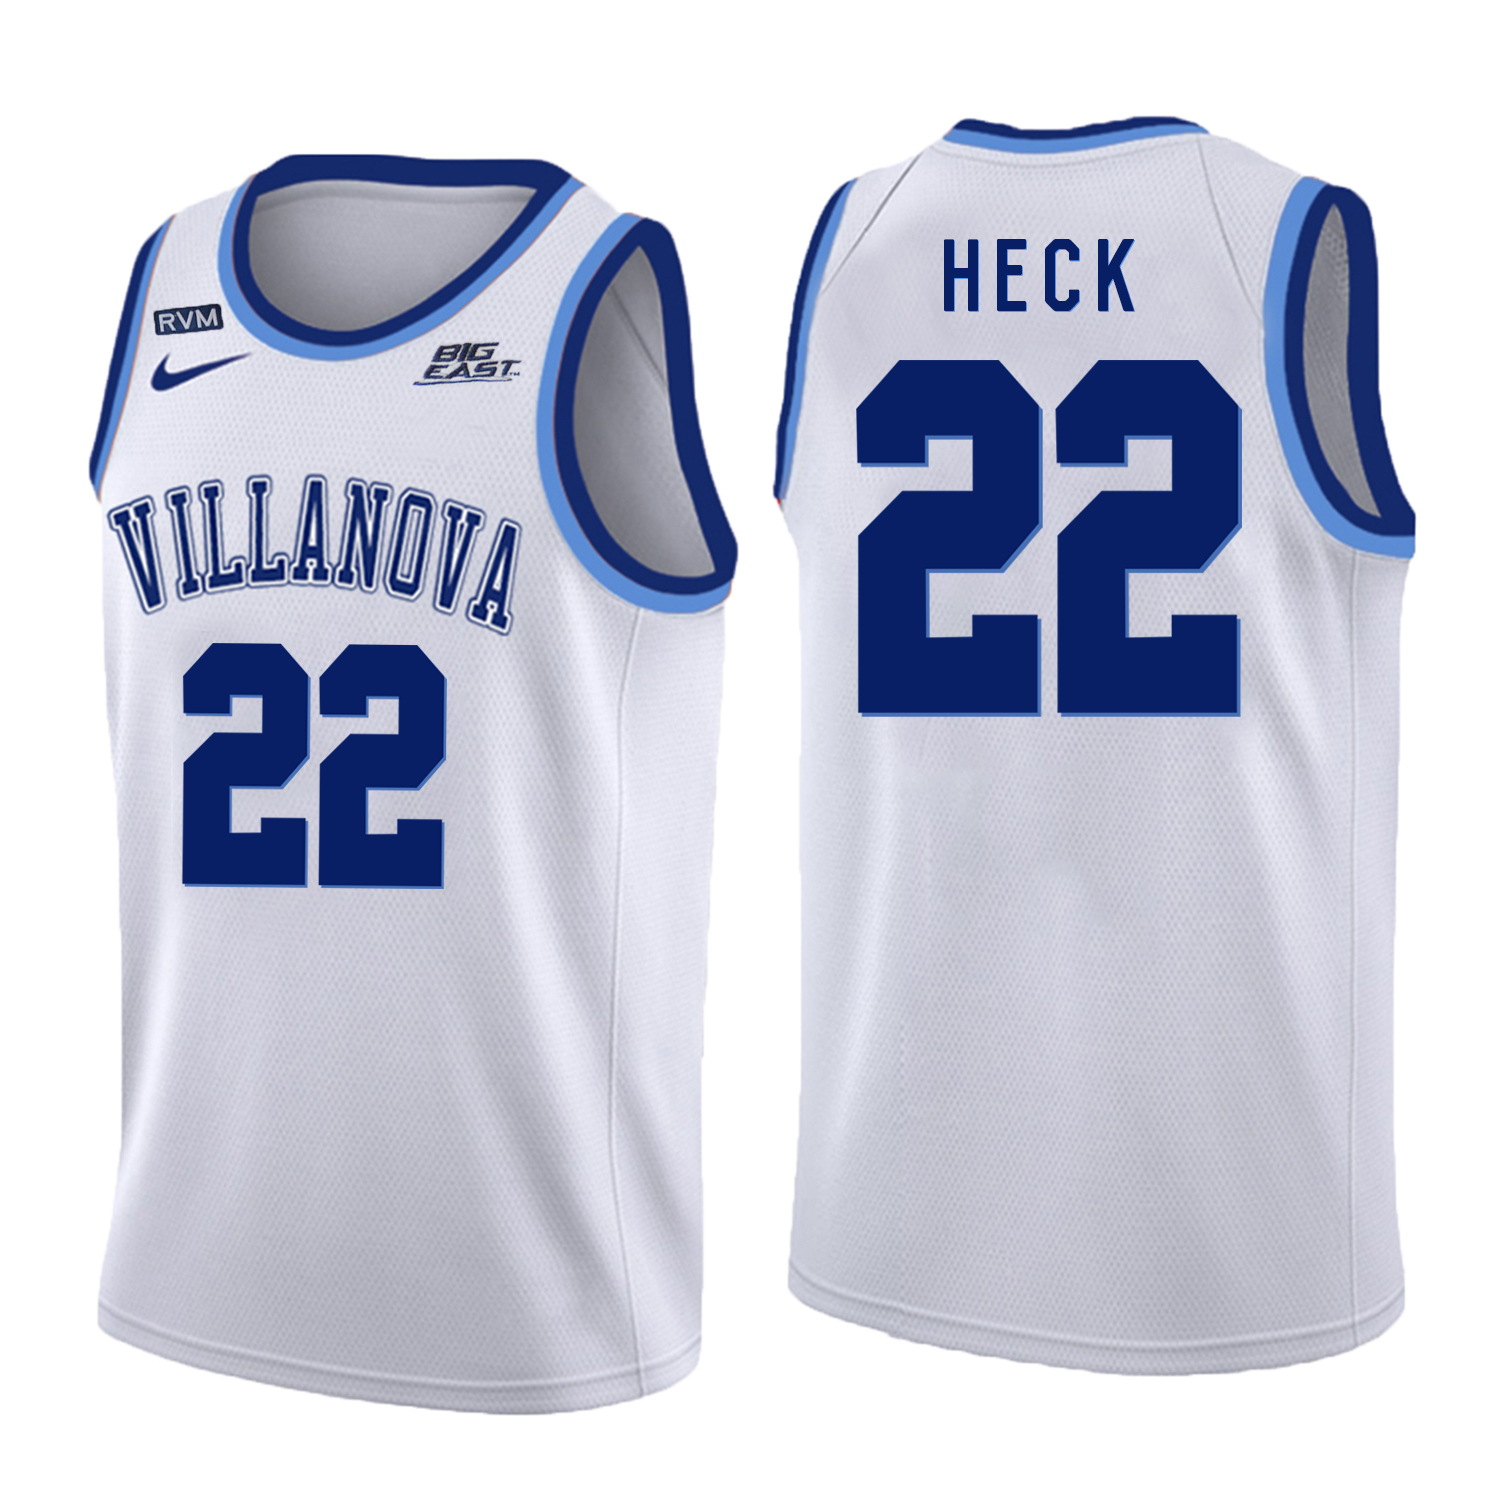 Villanova Wildcats 22 Peyton Heck White College Basketball Jersey